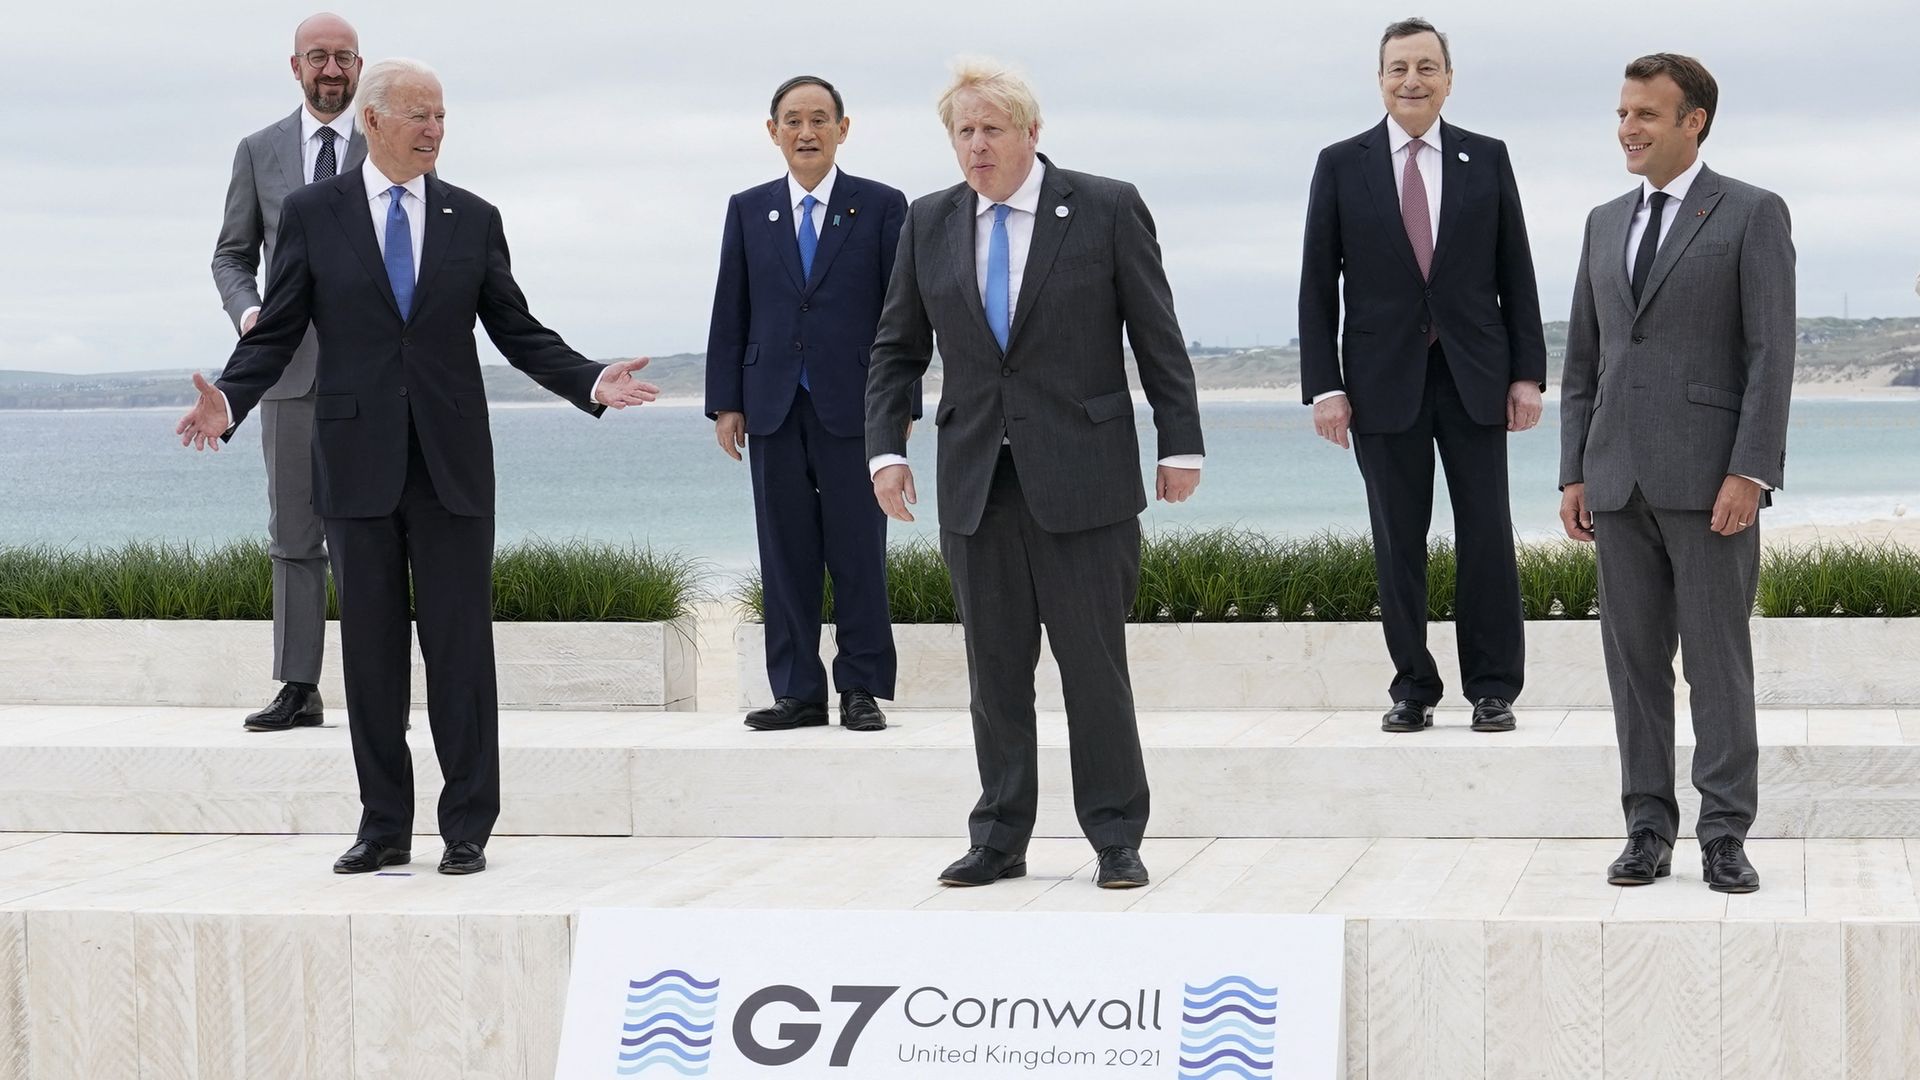 President Biden is seen with British Prime Minister Boris Johnson and French President Emmanuel Macron.